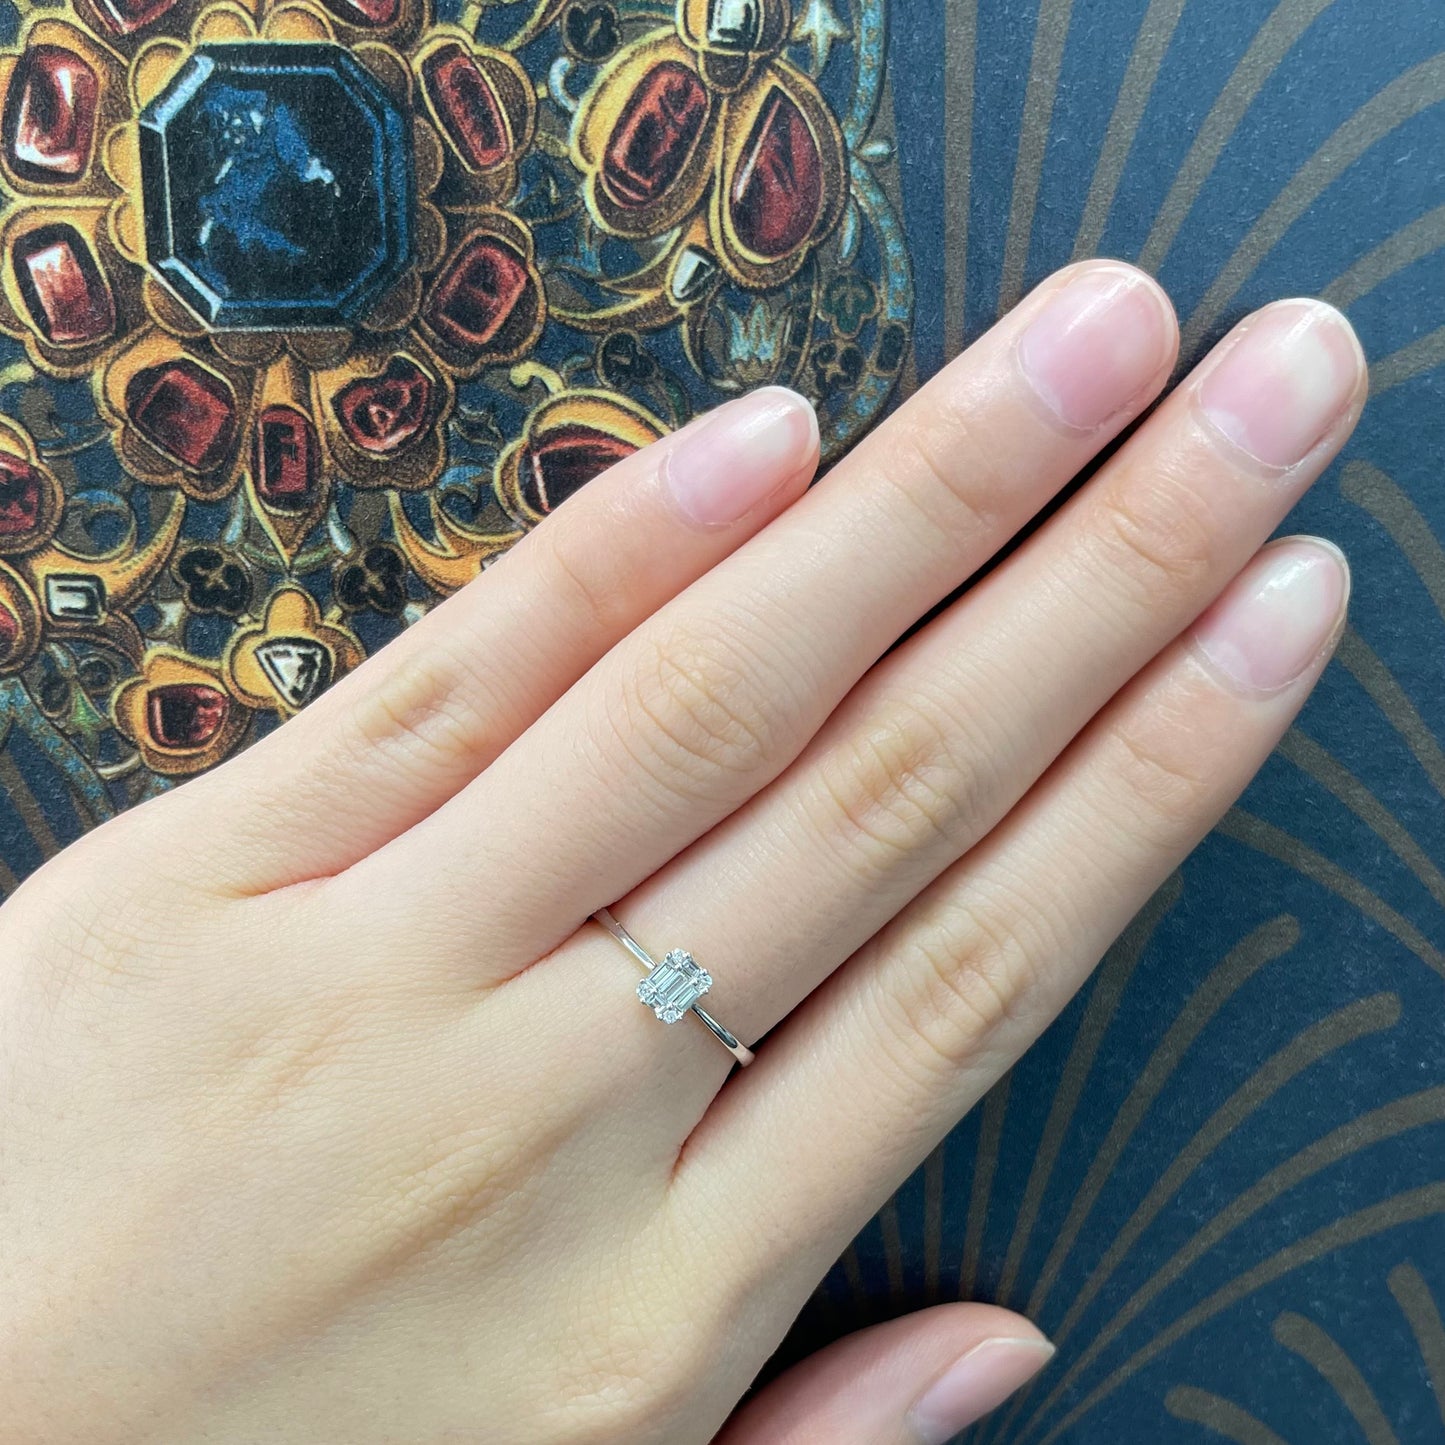 18k白金祖母綠切割鑽石戒指在中指上 18k White Gold Baguette Step-cut Mini Size Diamond Ring on middle finger